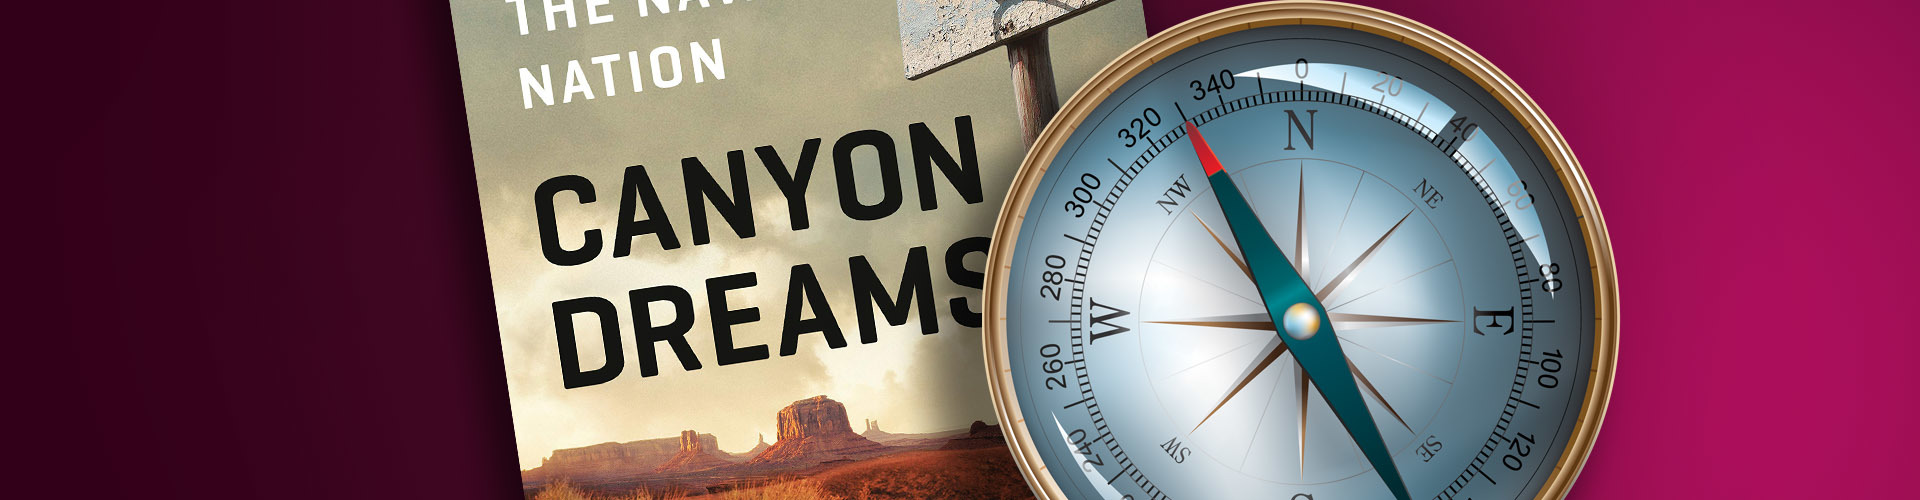 canyon dreams